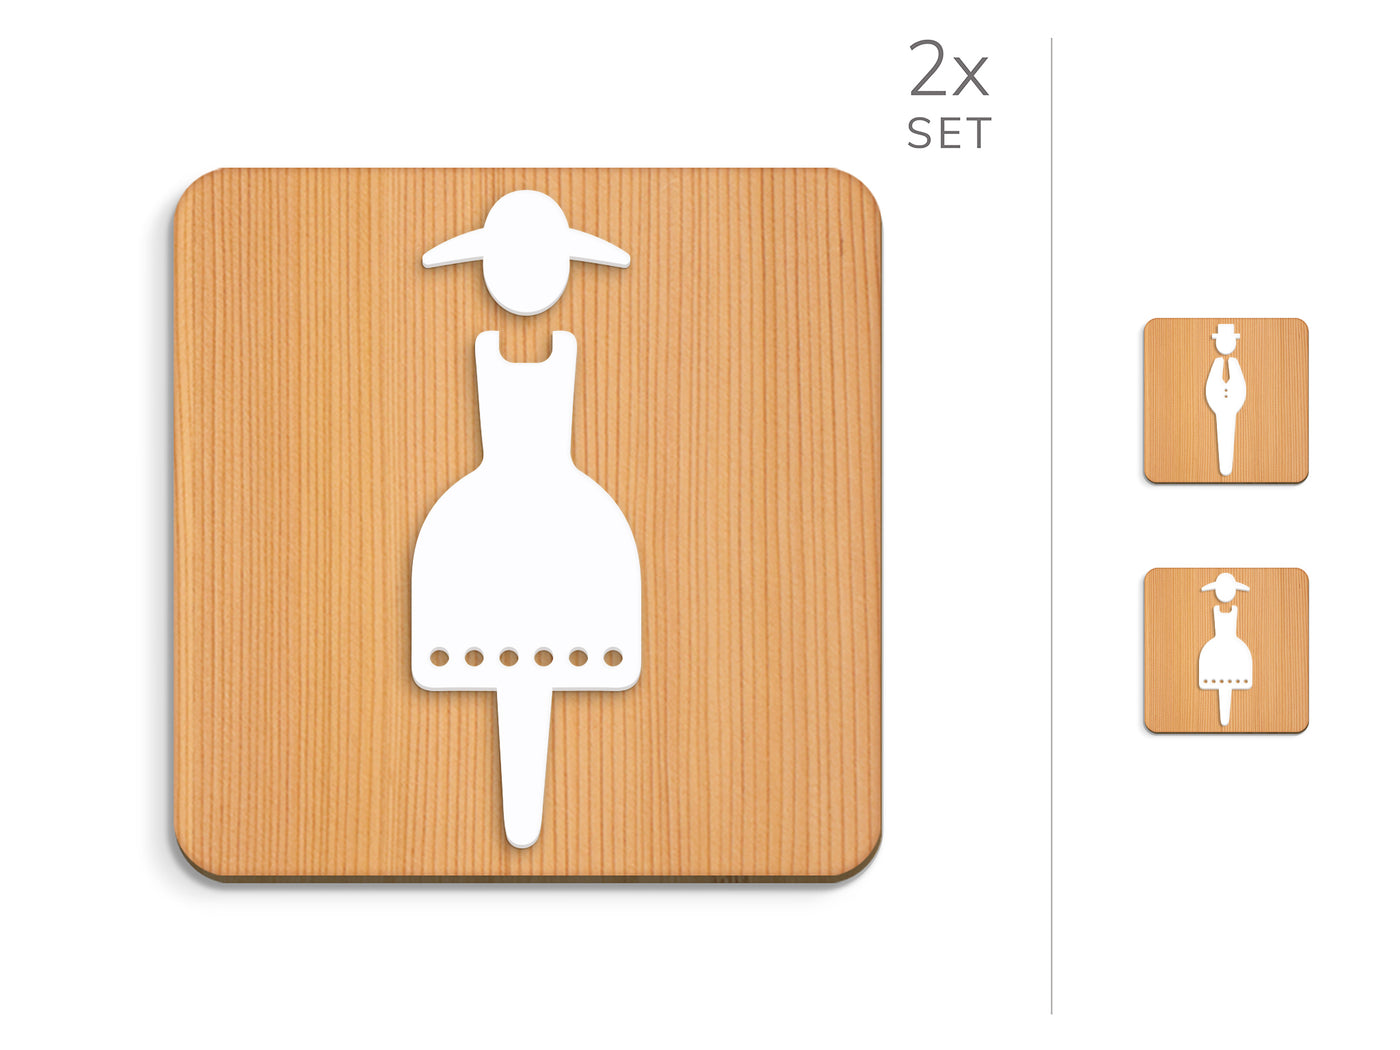 Amish, 2x Base Quadrata - Set targhe per bagno, segnaletica servizi igienici - Uomo, Donna